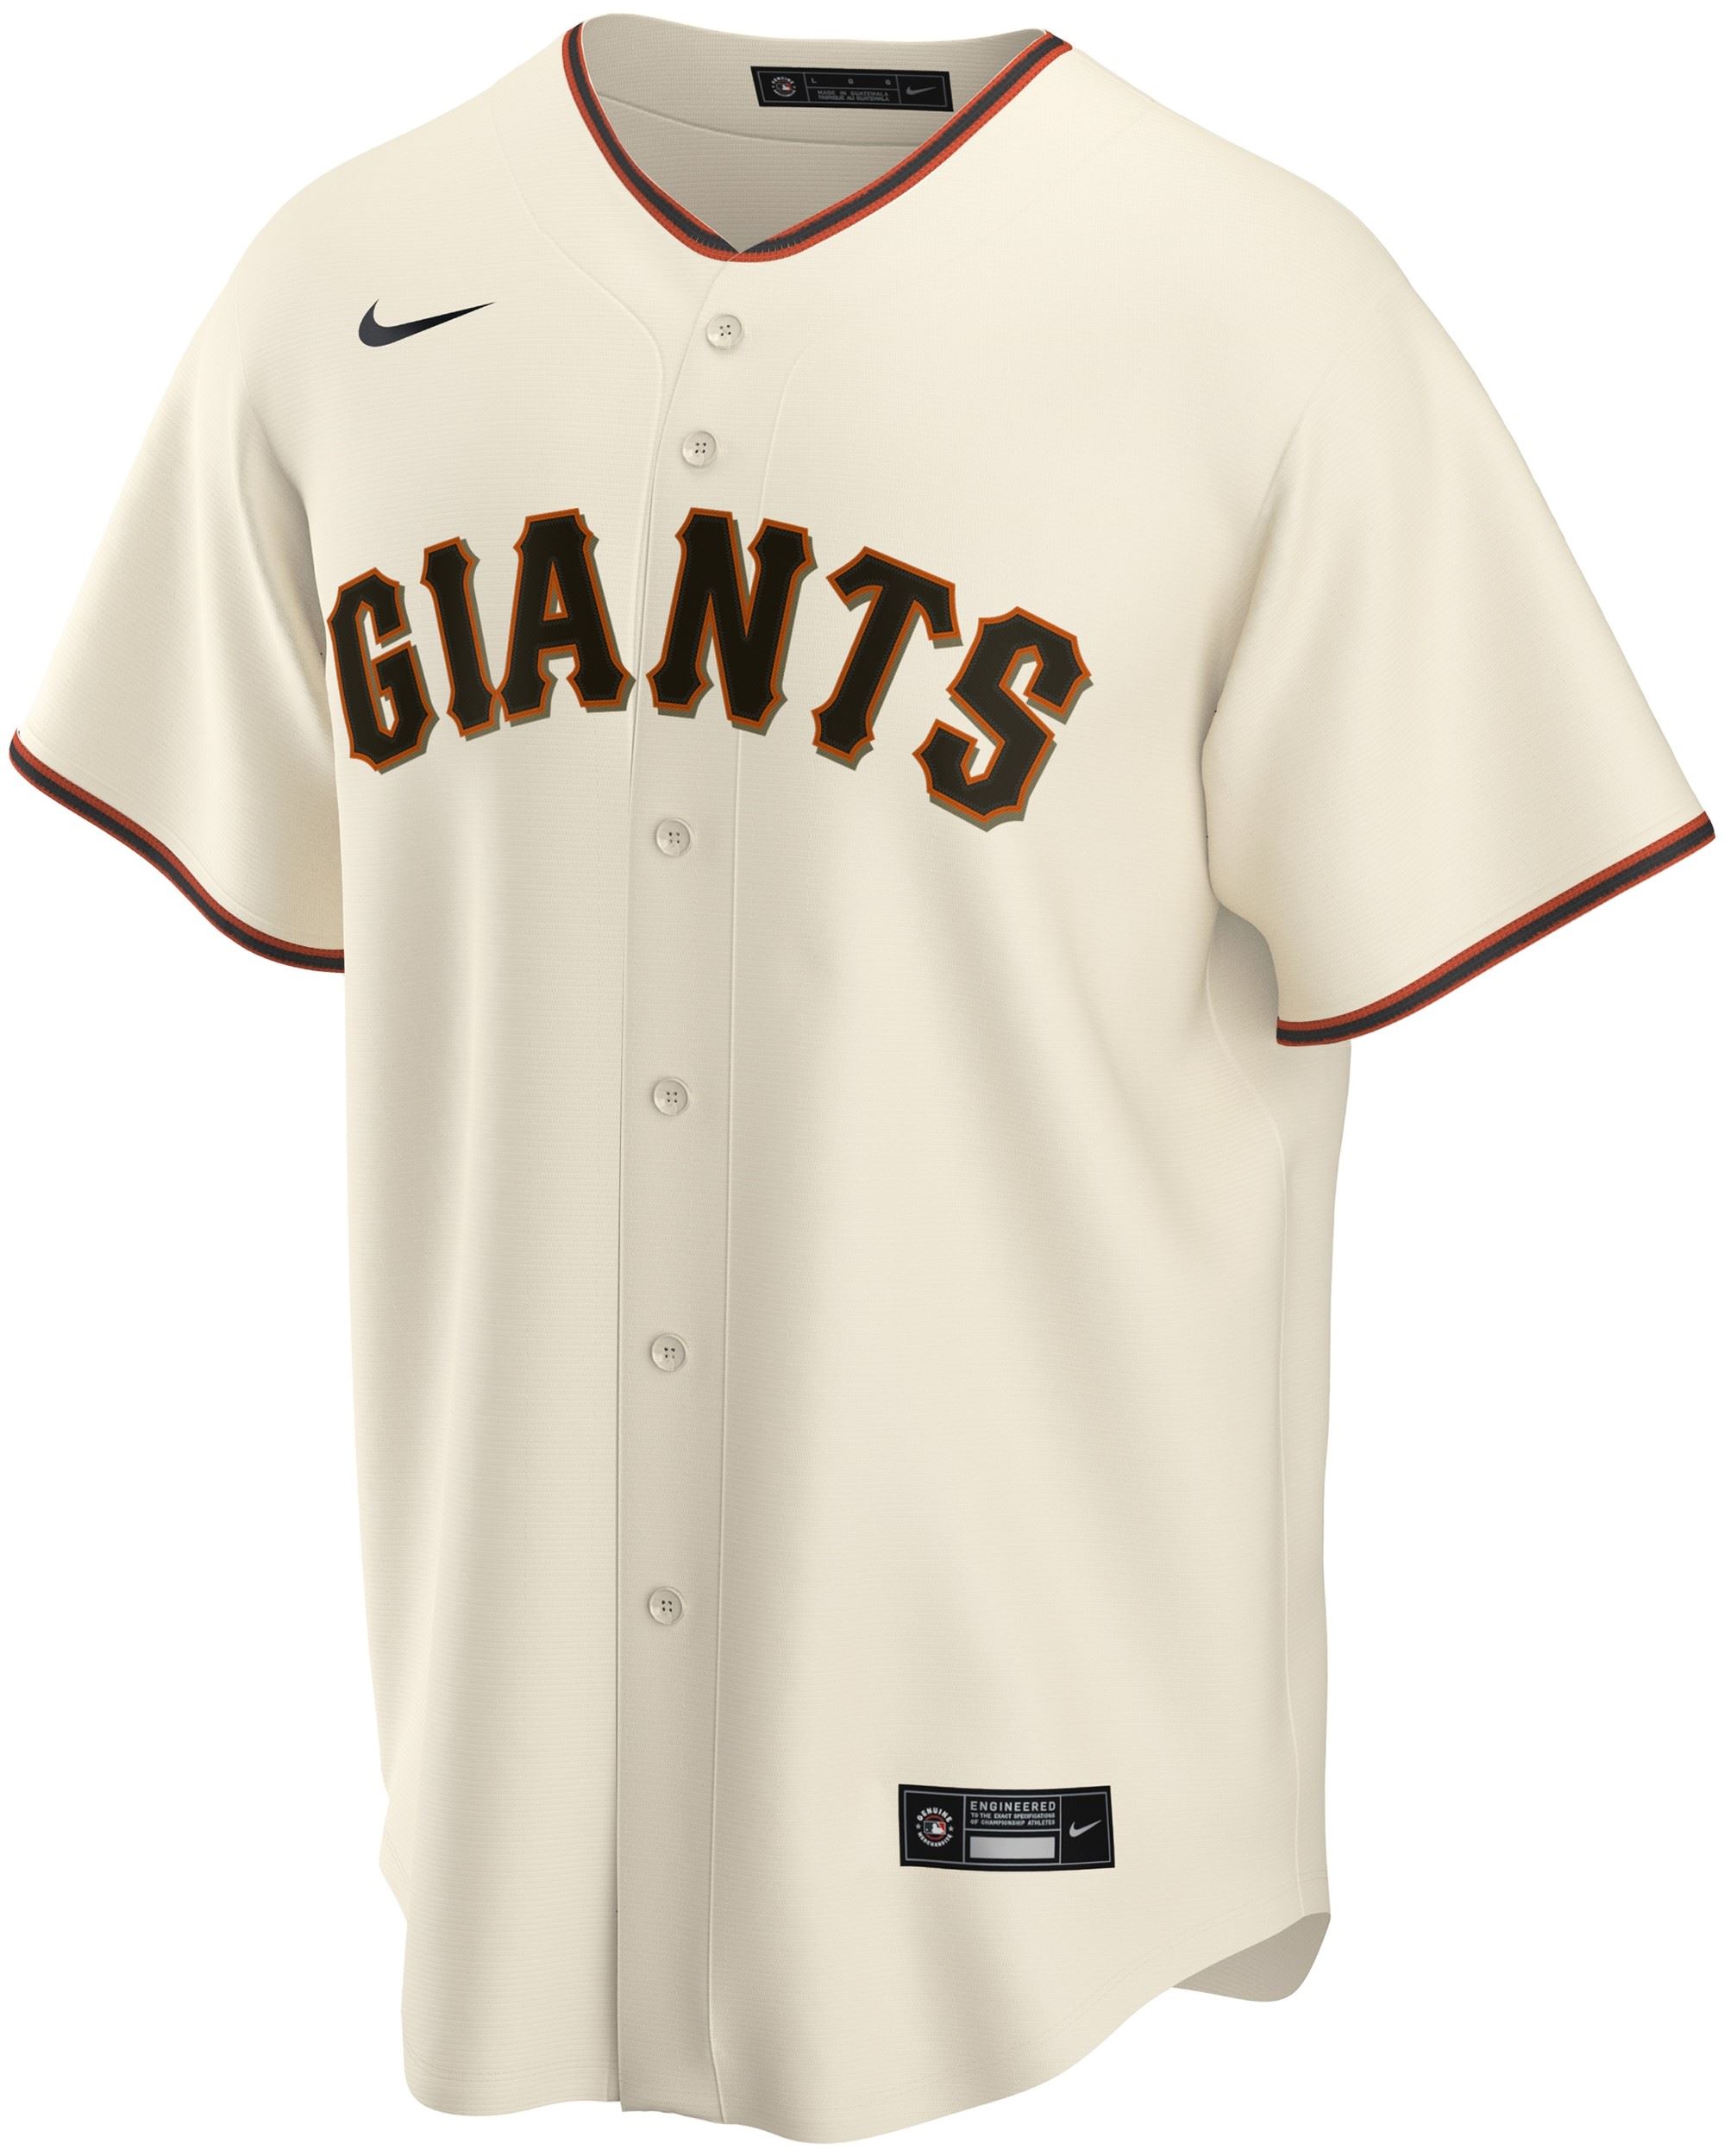 San Francisco Giants Official MLB Replica Home Jersey Cream Nike